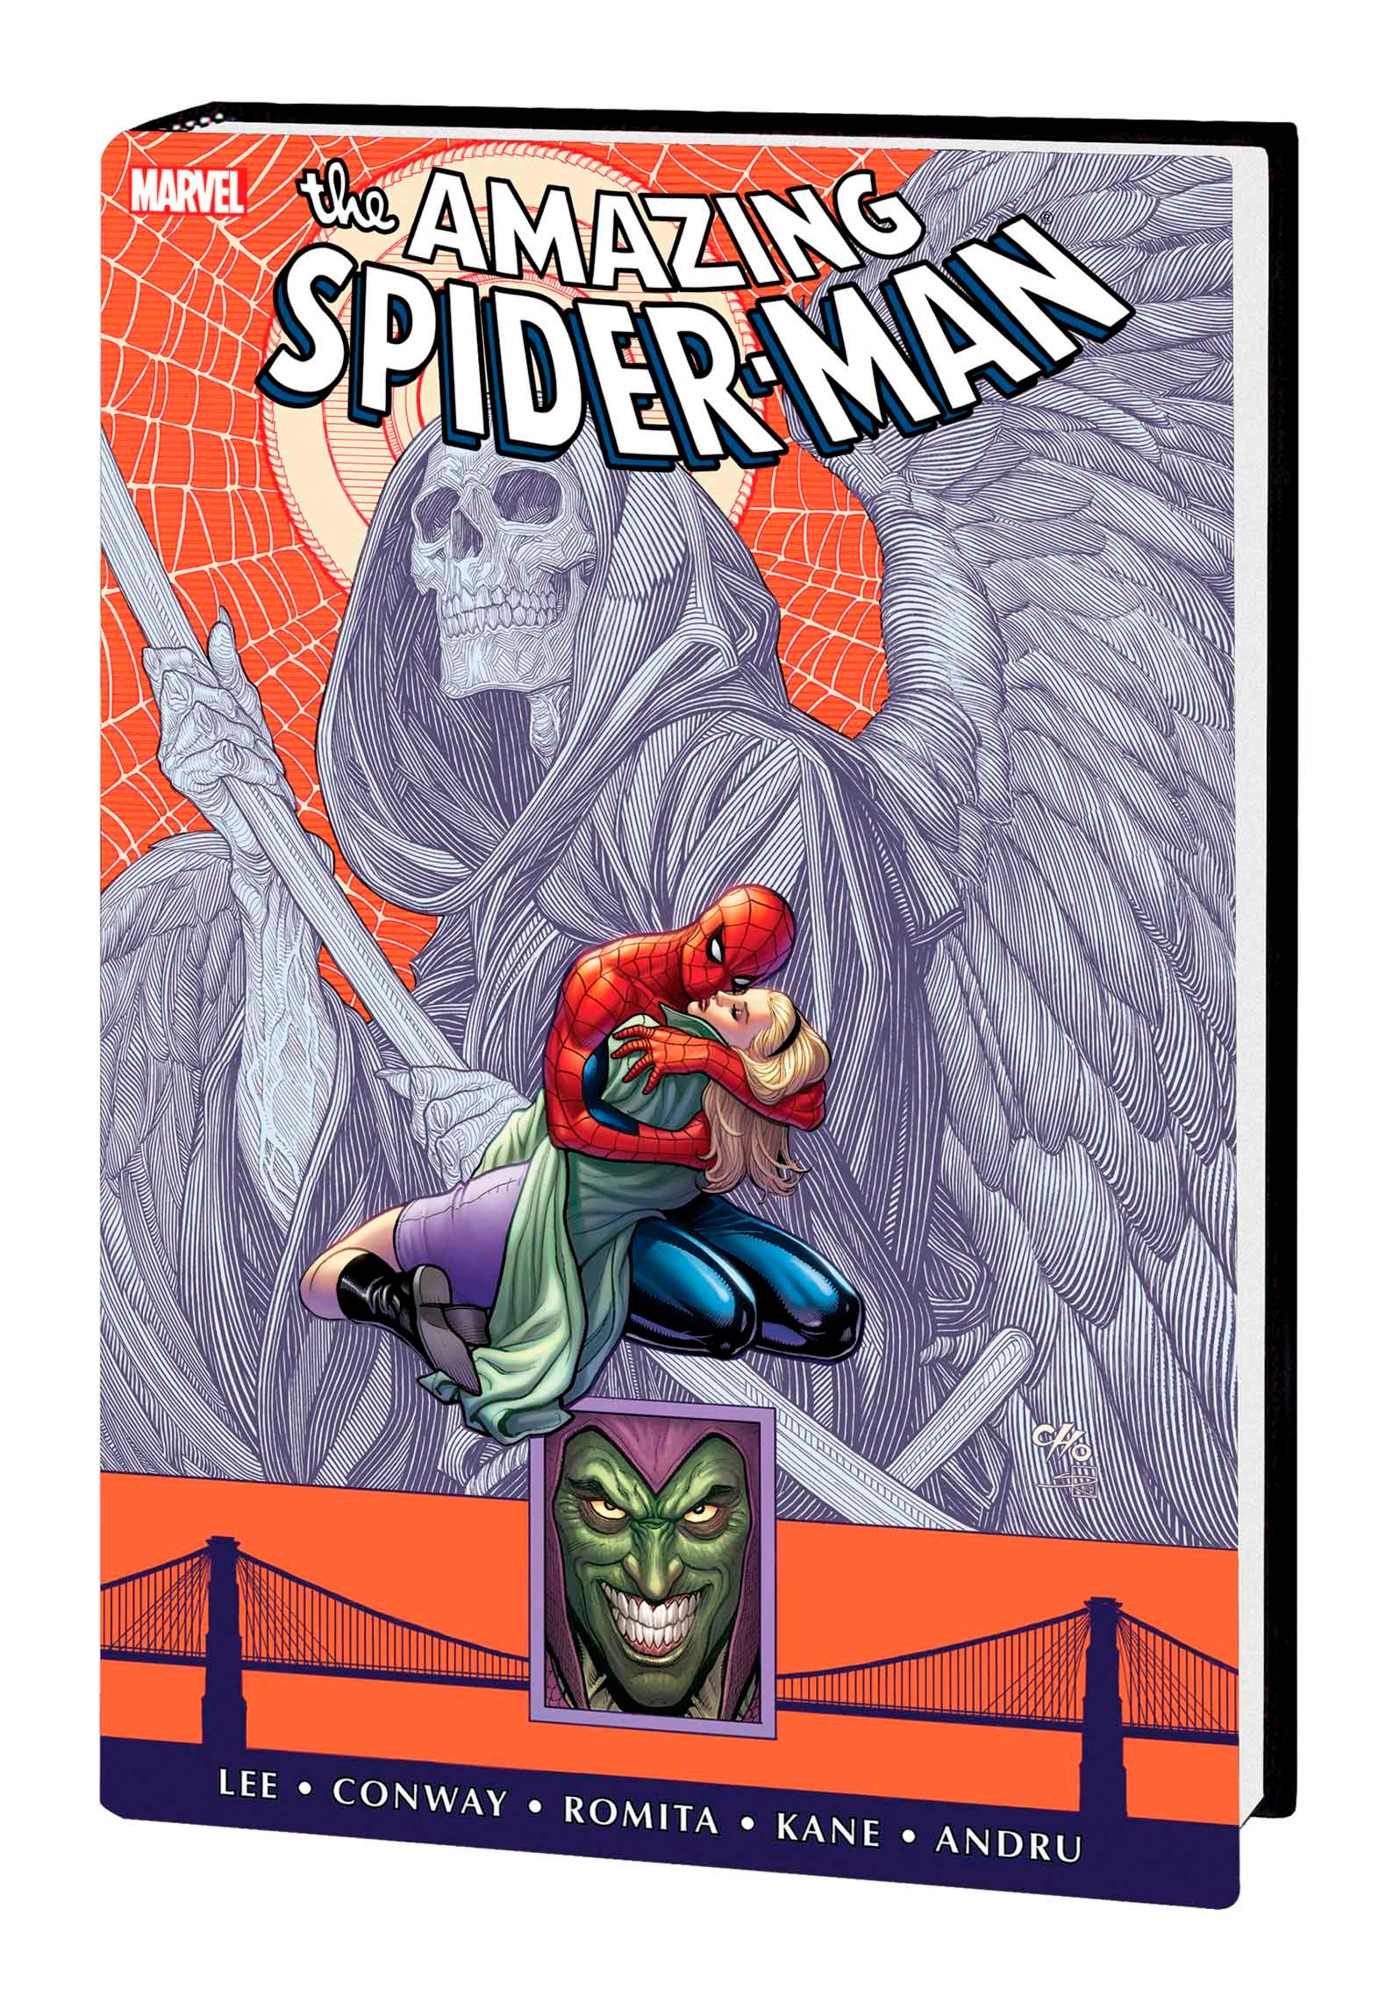 The AMAZING SPIDER-MAN OMNIBUS VOL. 4 by Stan Lee - Penguin Books Australia